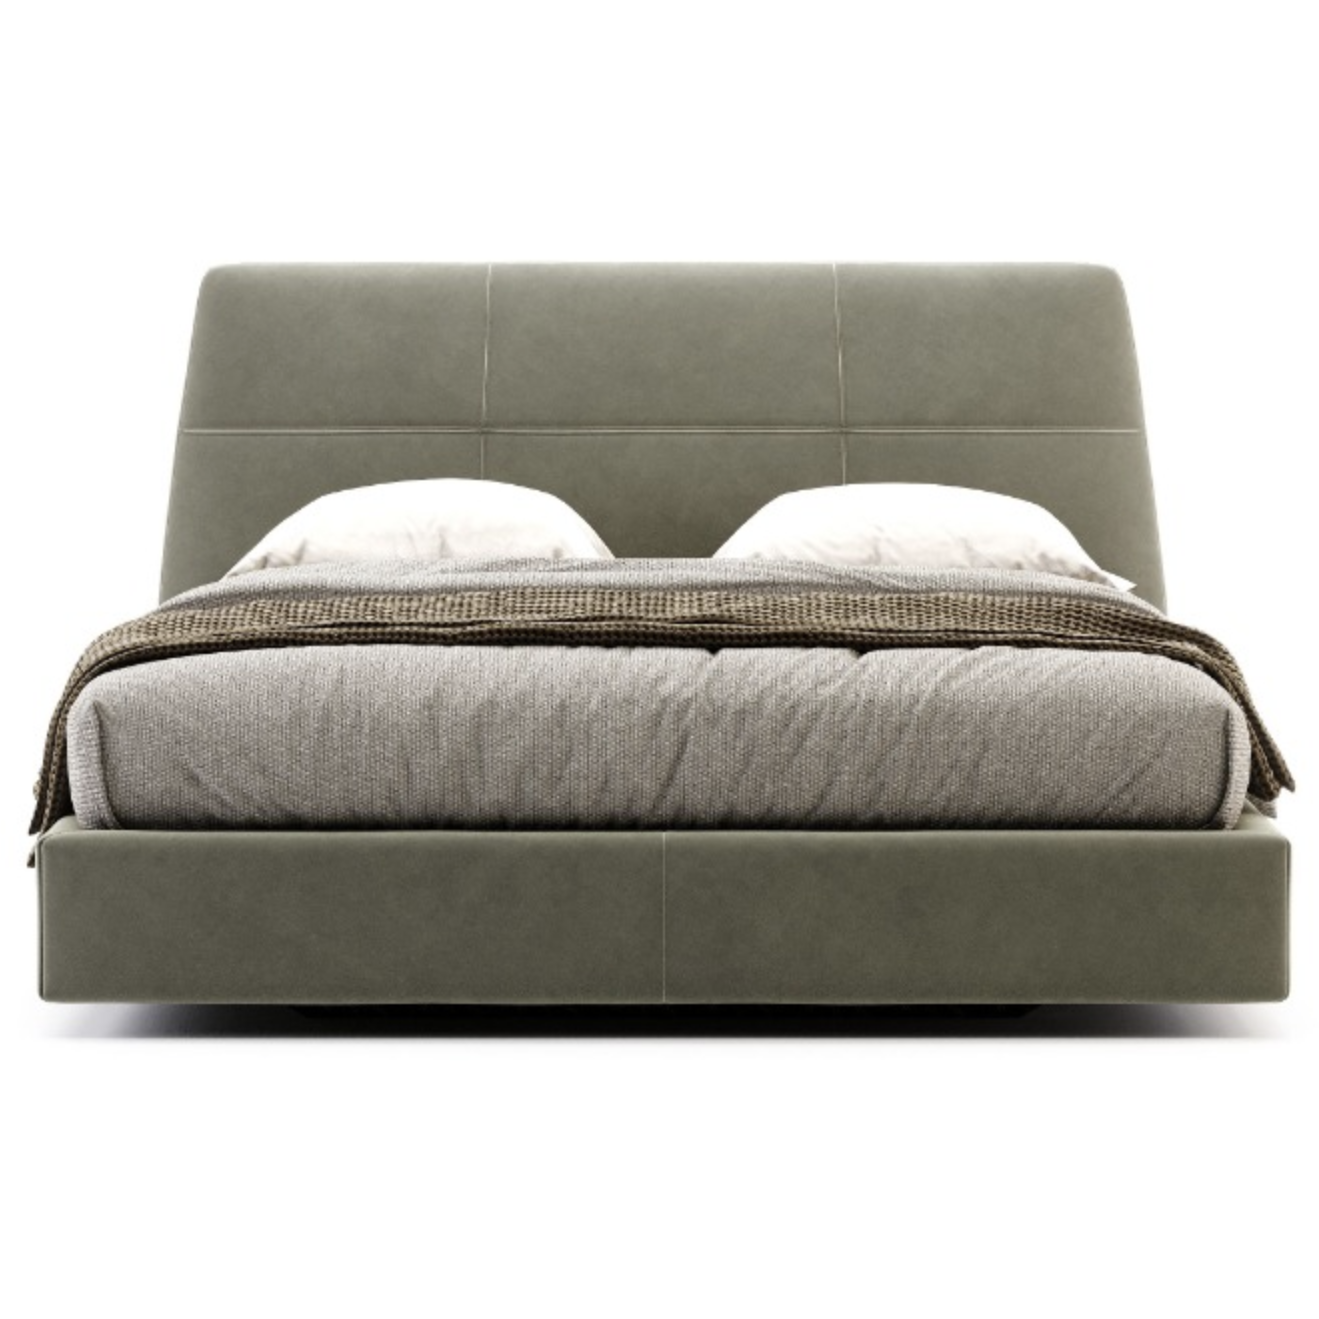 Domkapa Shelby King Size Bed - Customisable | Modern Furniture + Decor